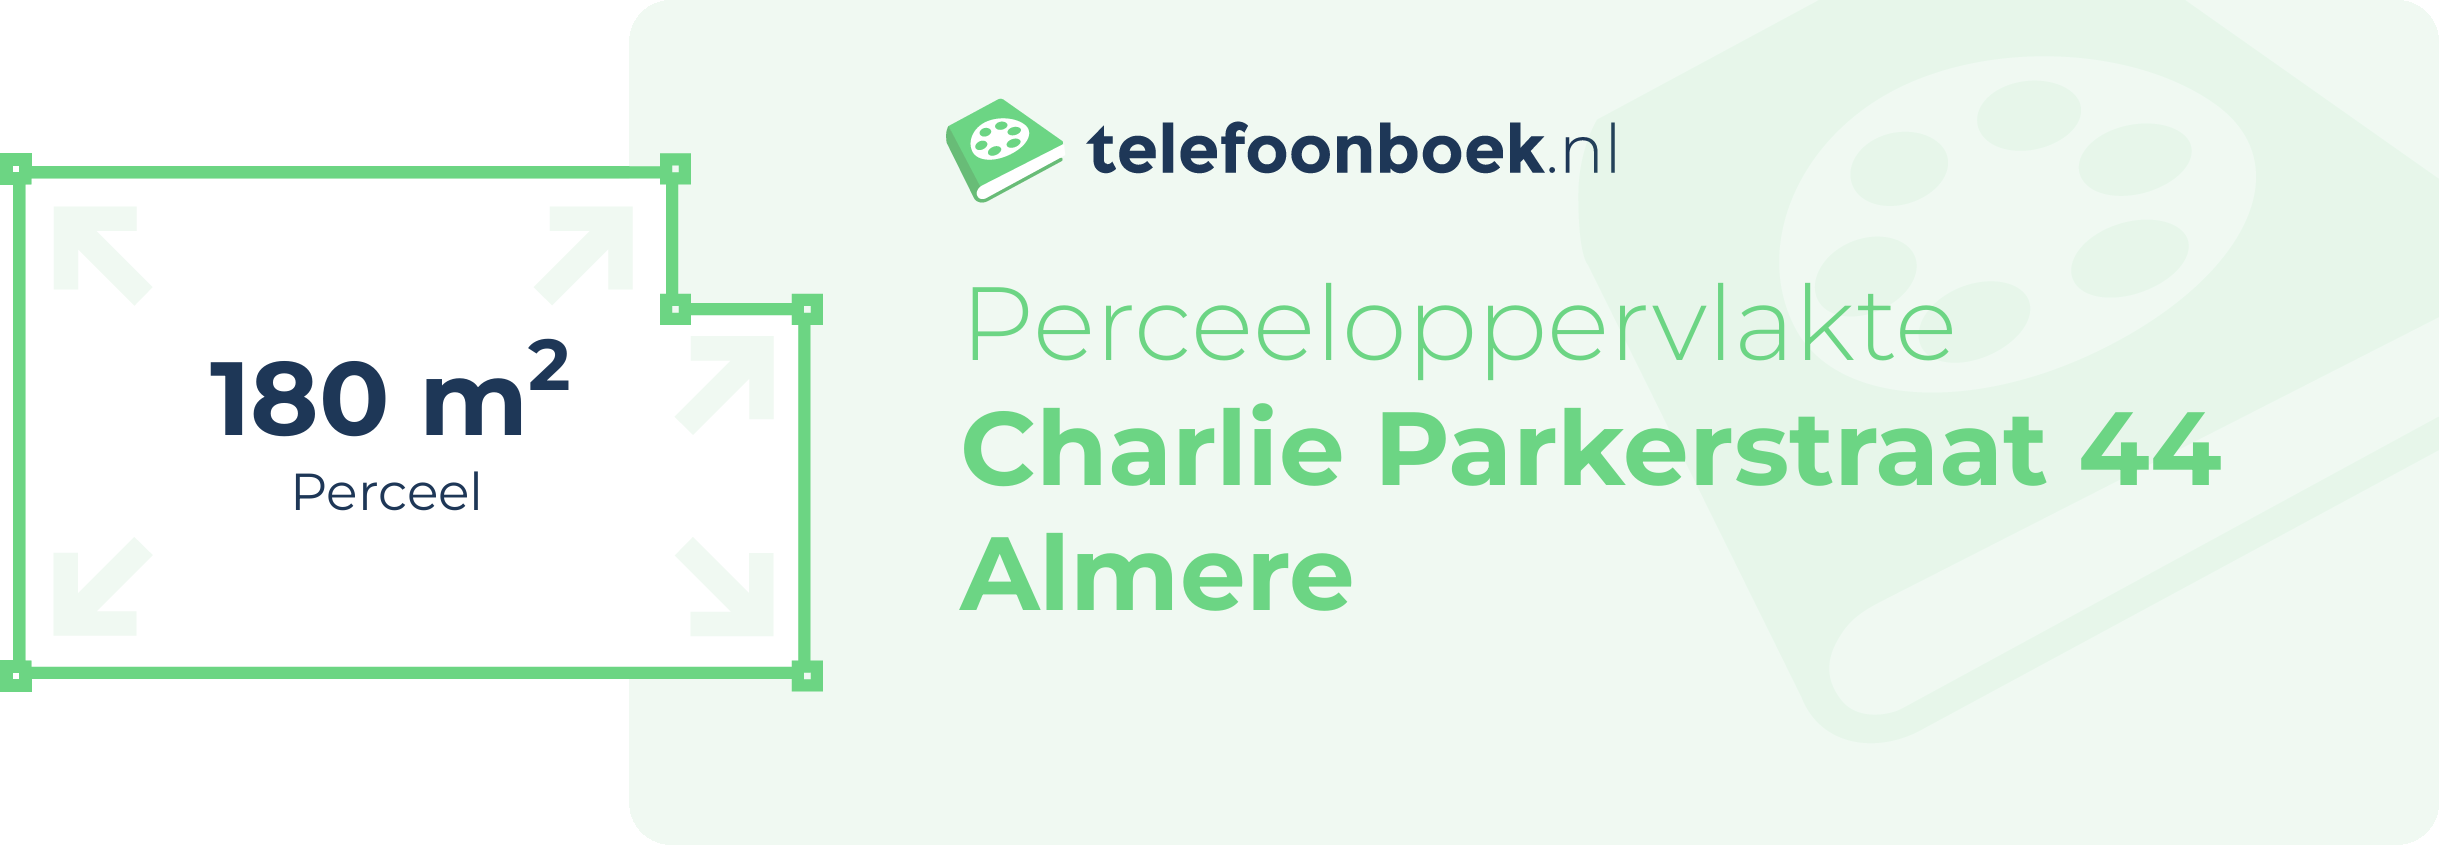 Perceeloppervlakte Charlie Parkerstraat 44 Almere